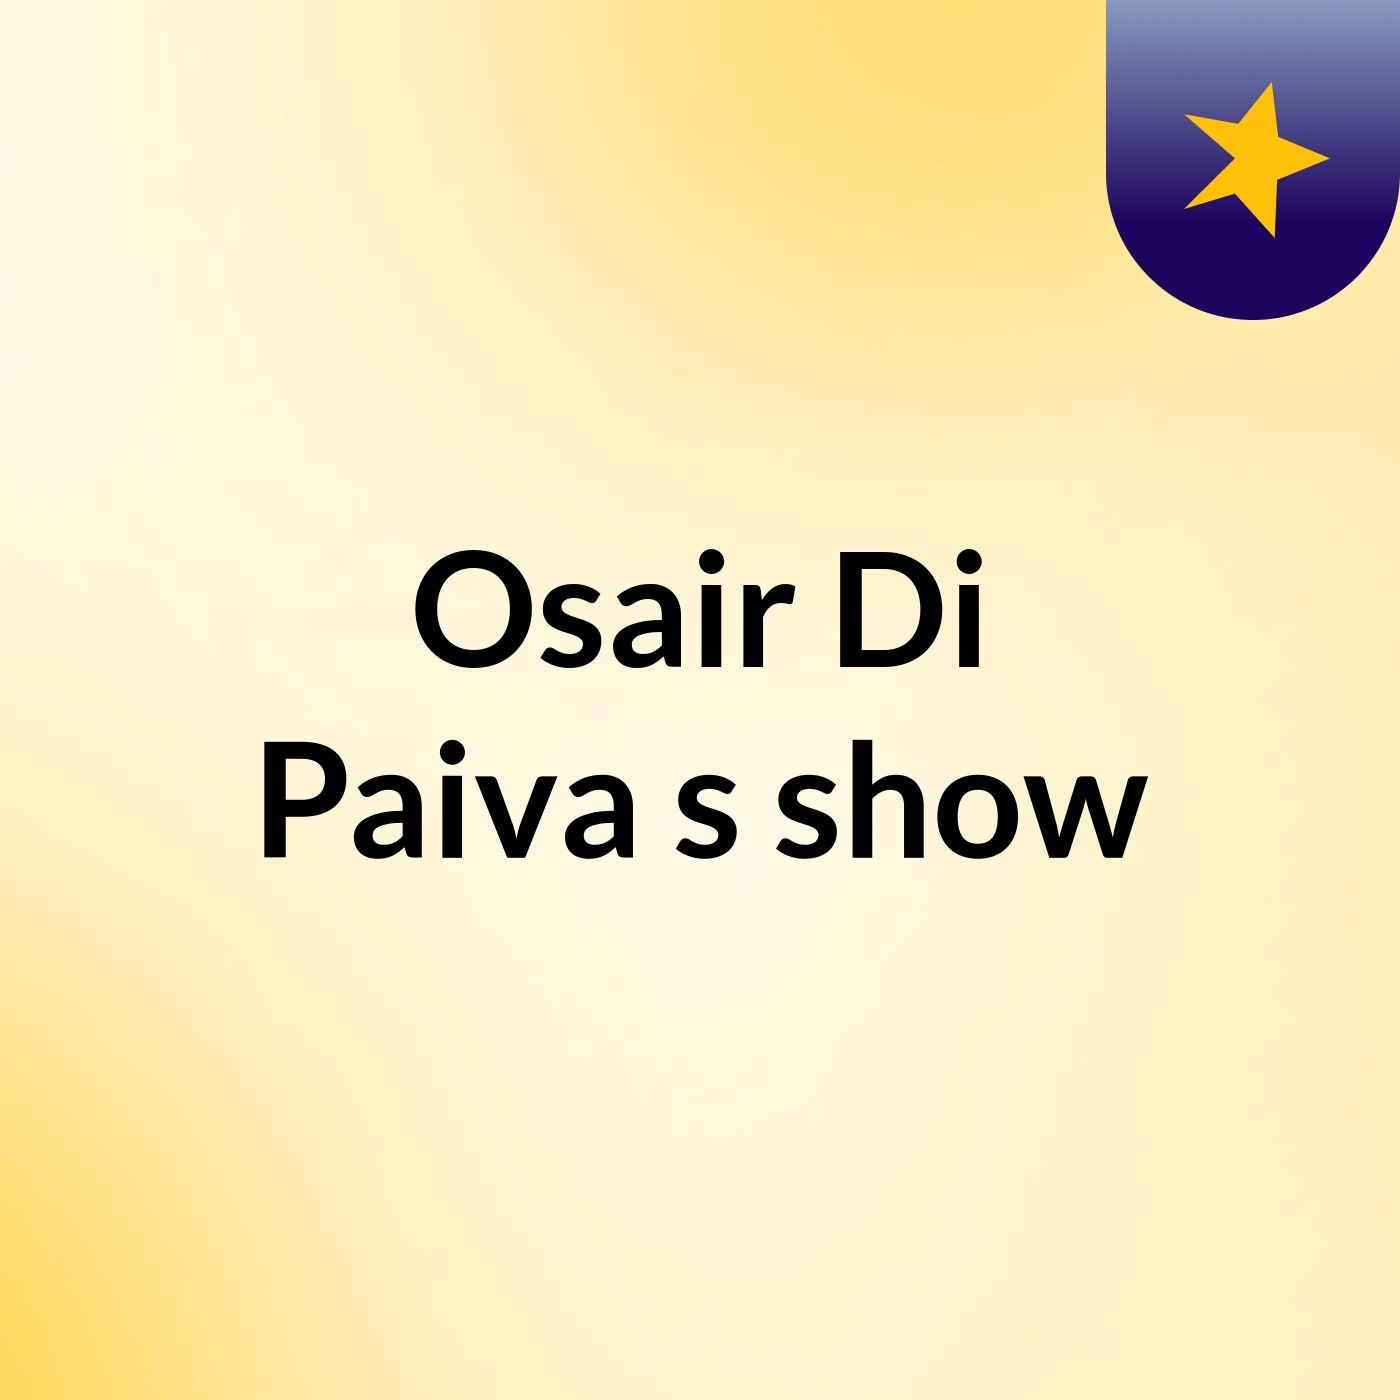 Osair Di Paiva's show